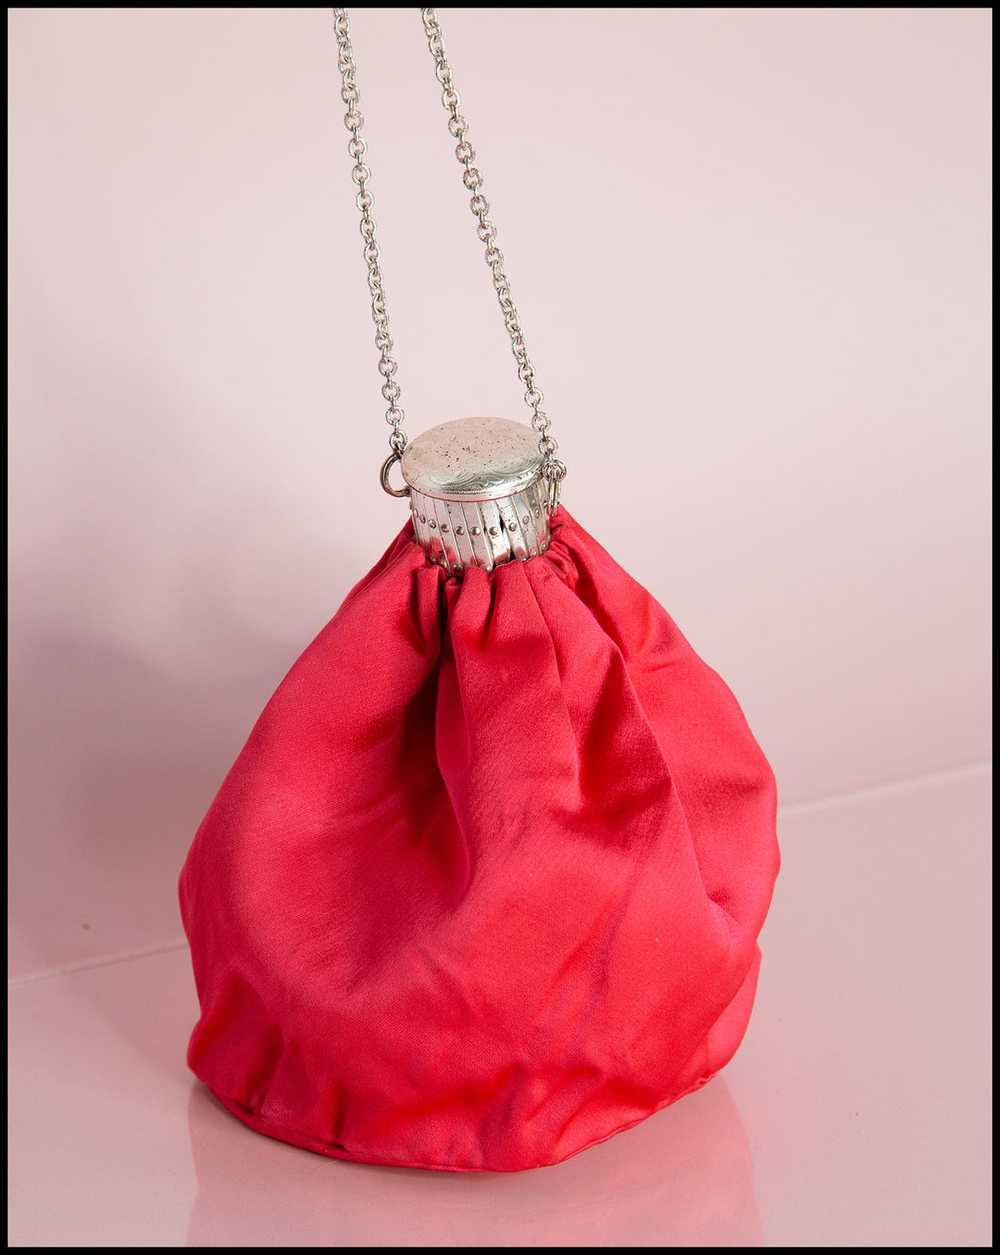 Vintage 1950s Shocking Pink Satin Evening Bag - image 5